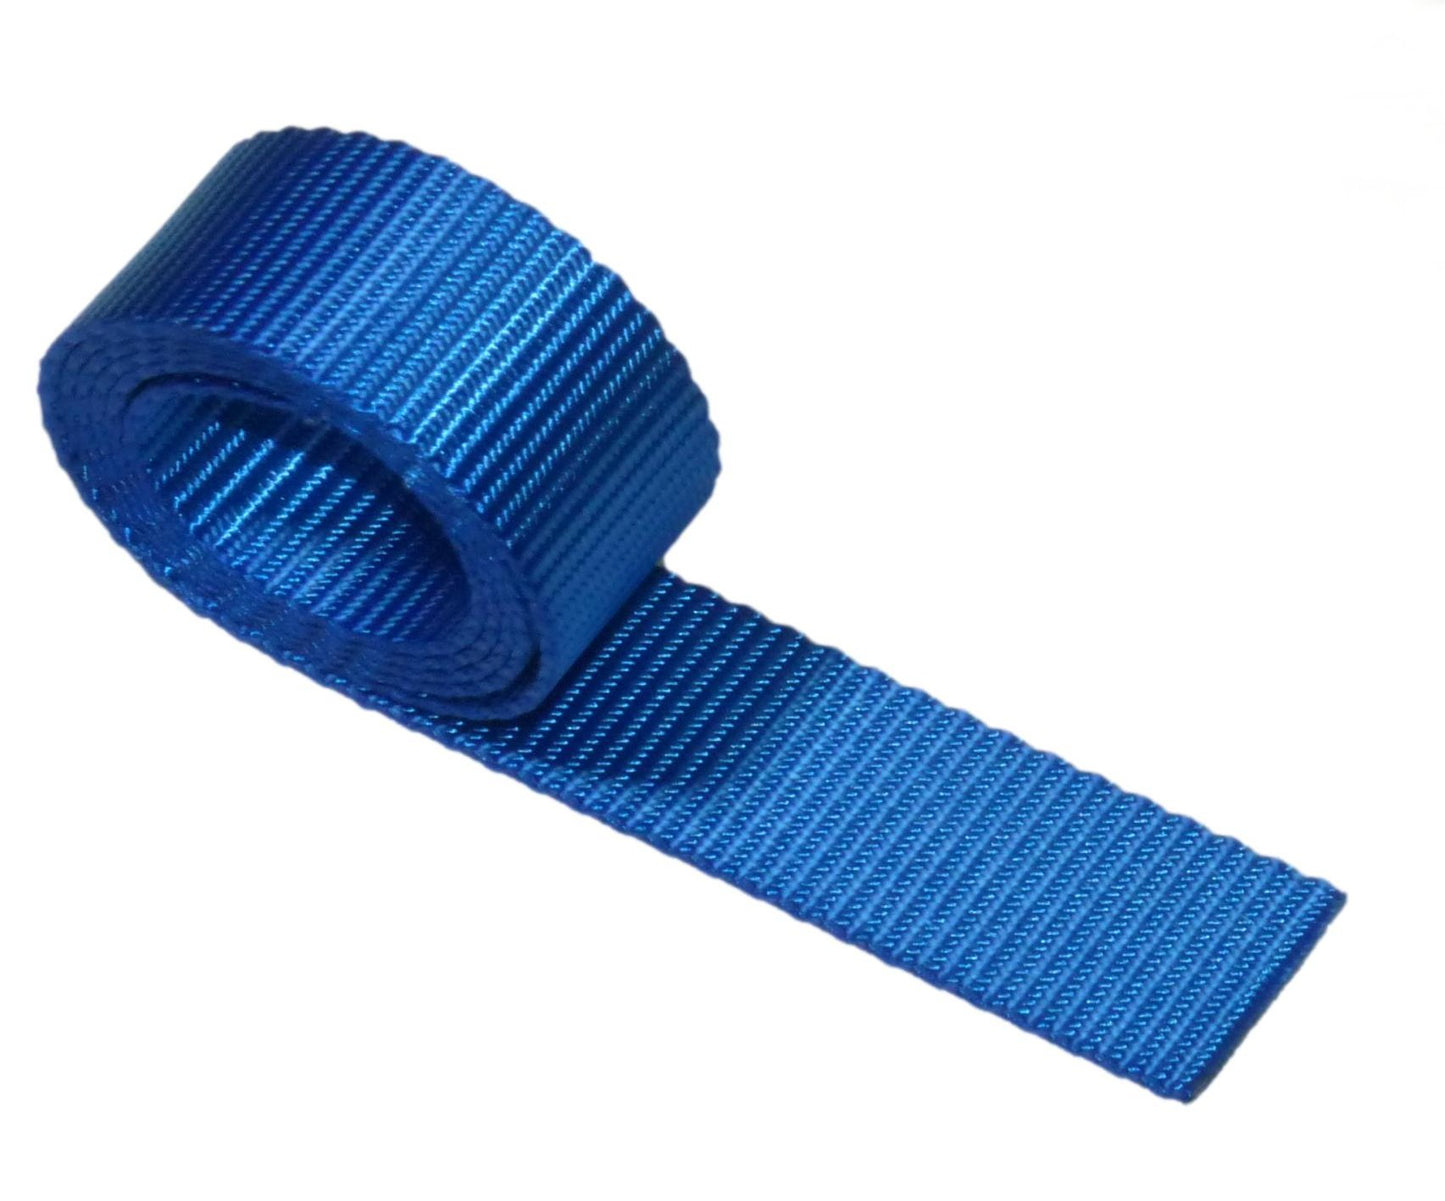 Benristraps 25mm Polyester Webbing in blue